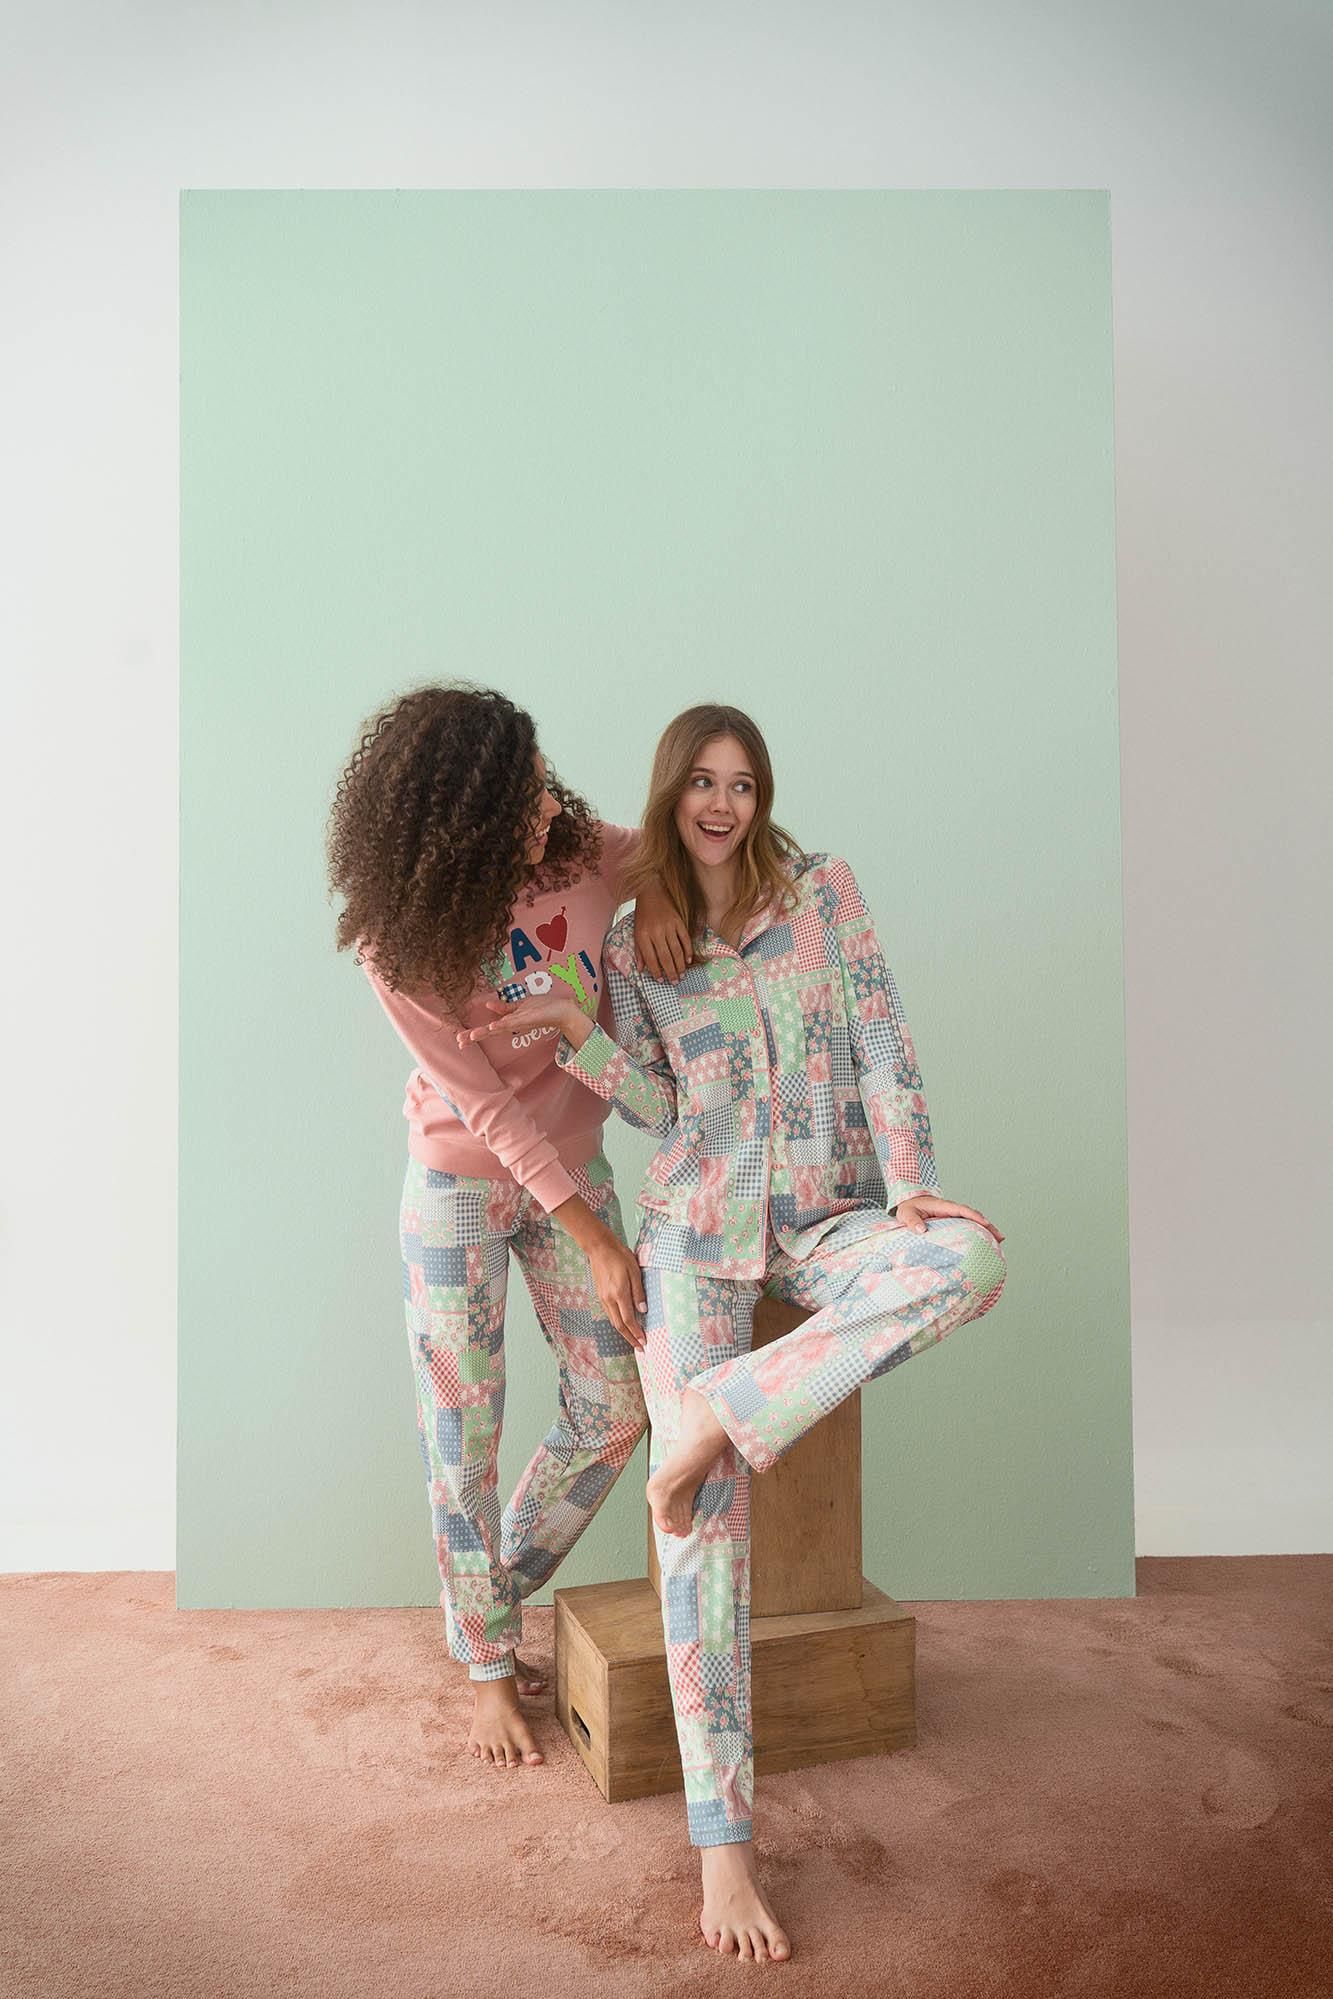 Pyjamas with Buttons